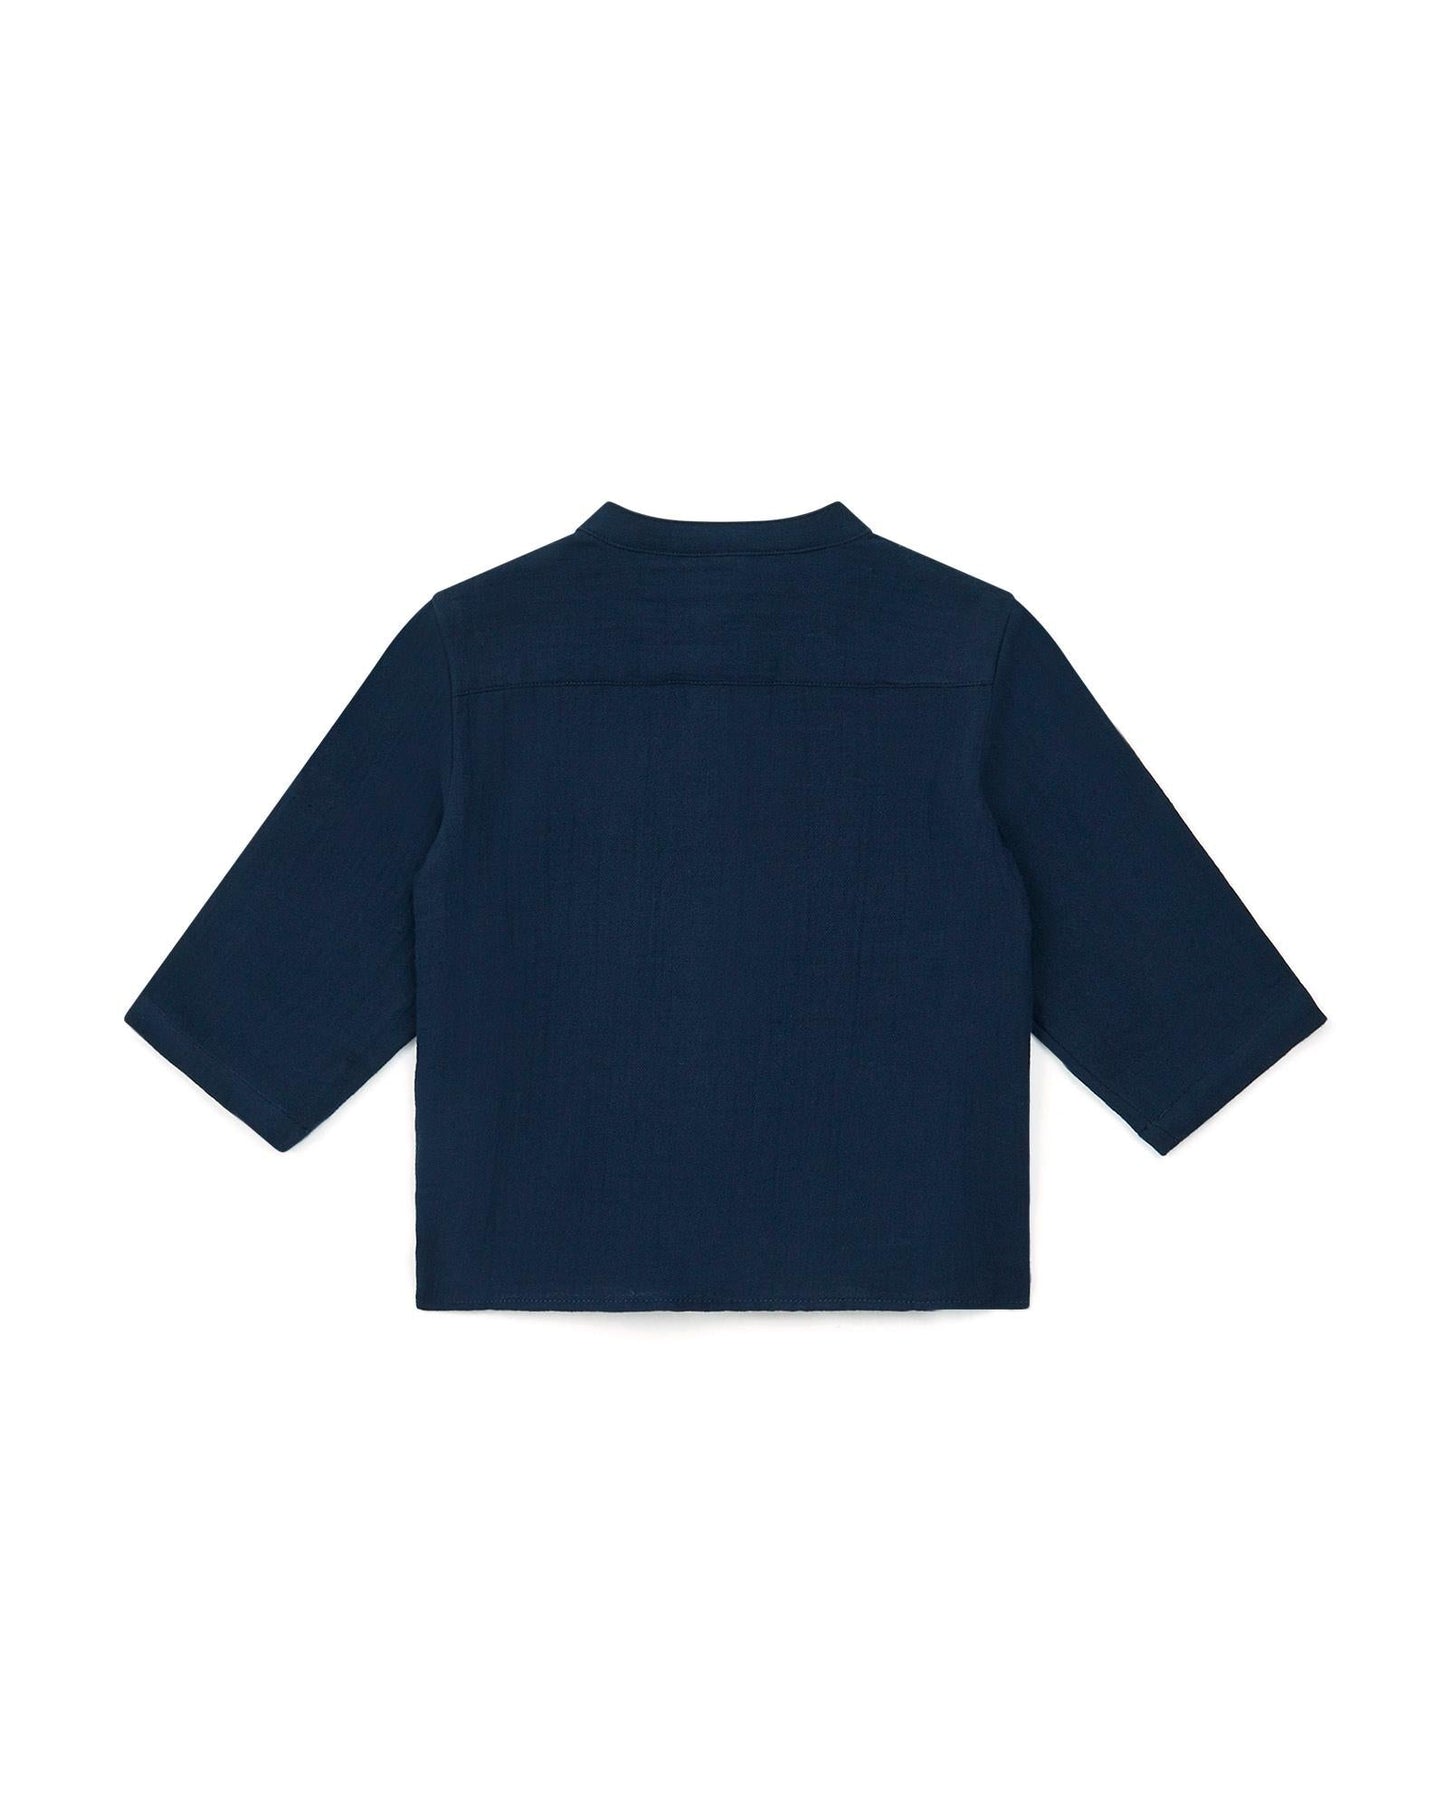 Shirt Inter Bleue Baby In 100% organic cotton gauze certified GOTS